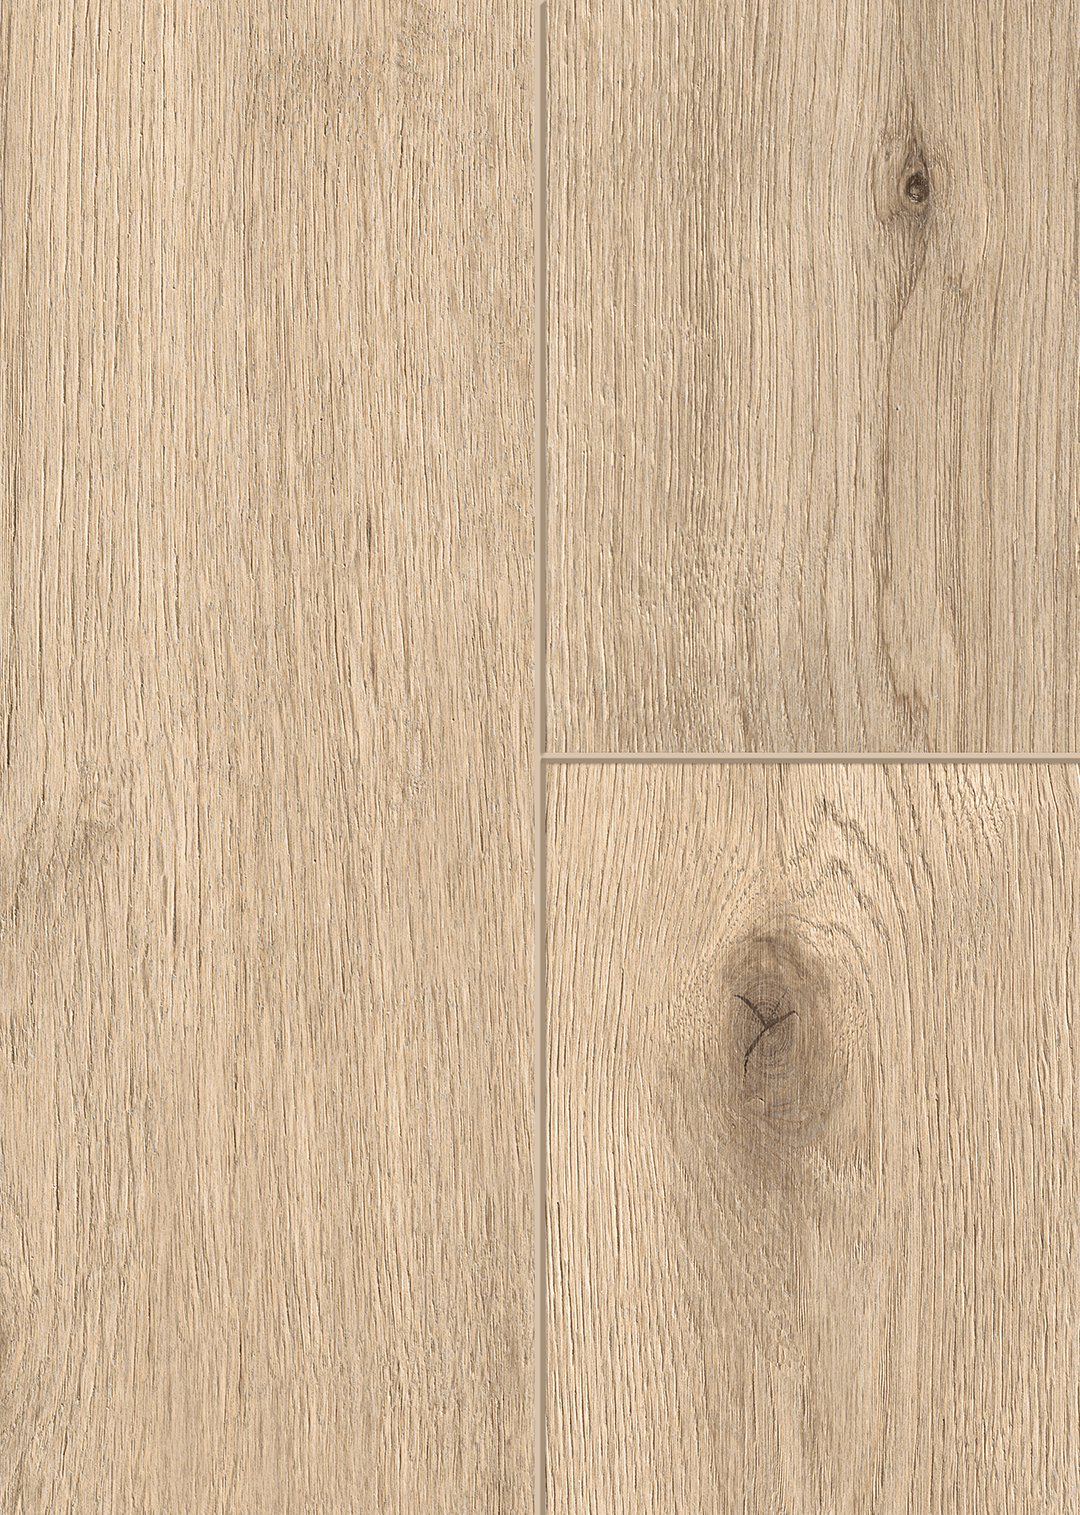 SPC vinilinės grindys GREEN VINYL 55517, šviesaus ąžuolo sp., 1290 x 203 x 4 mm, 32/AC4 - 2